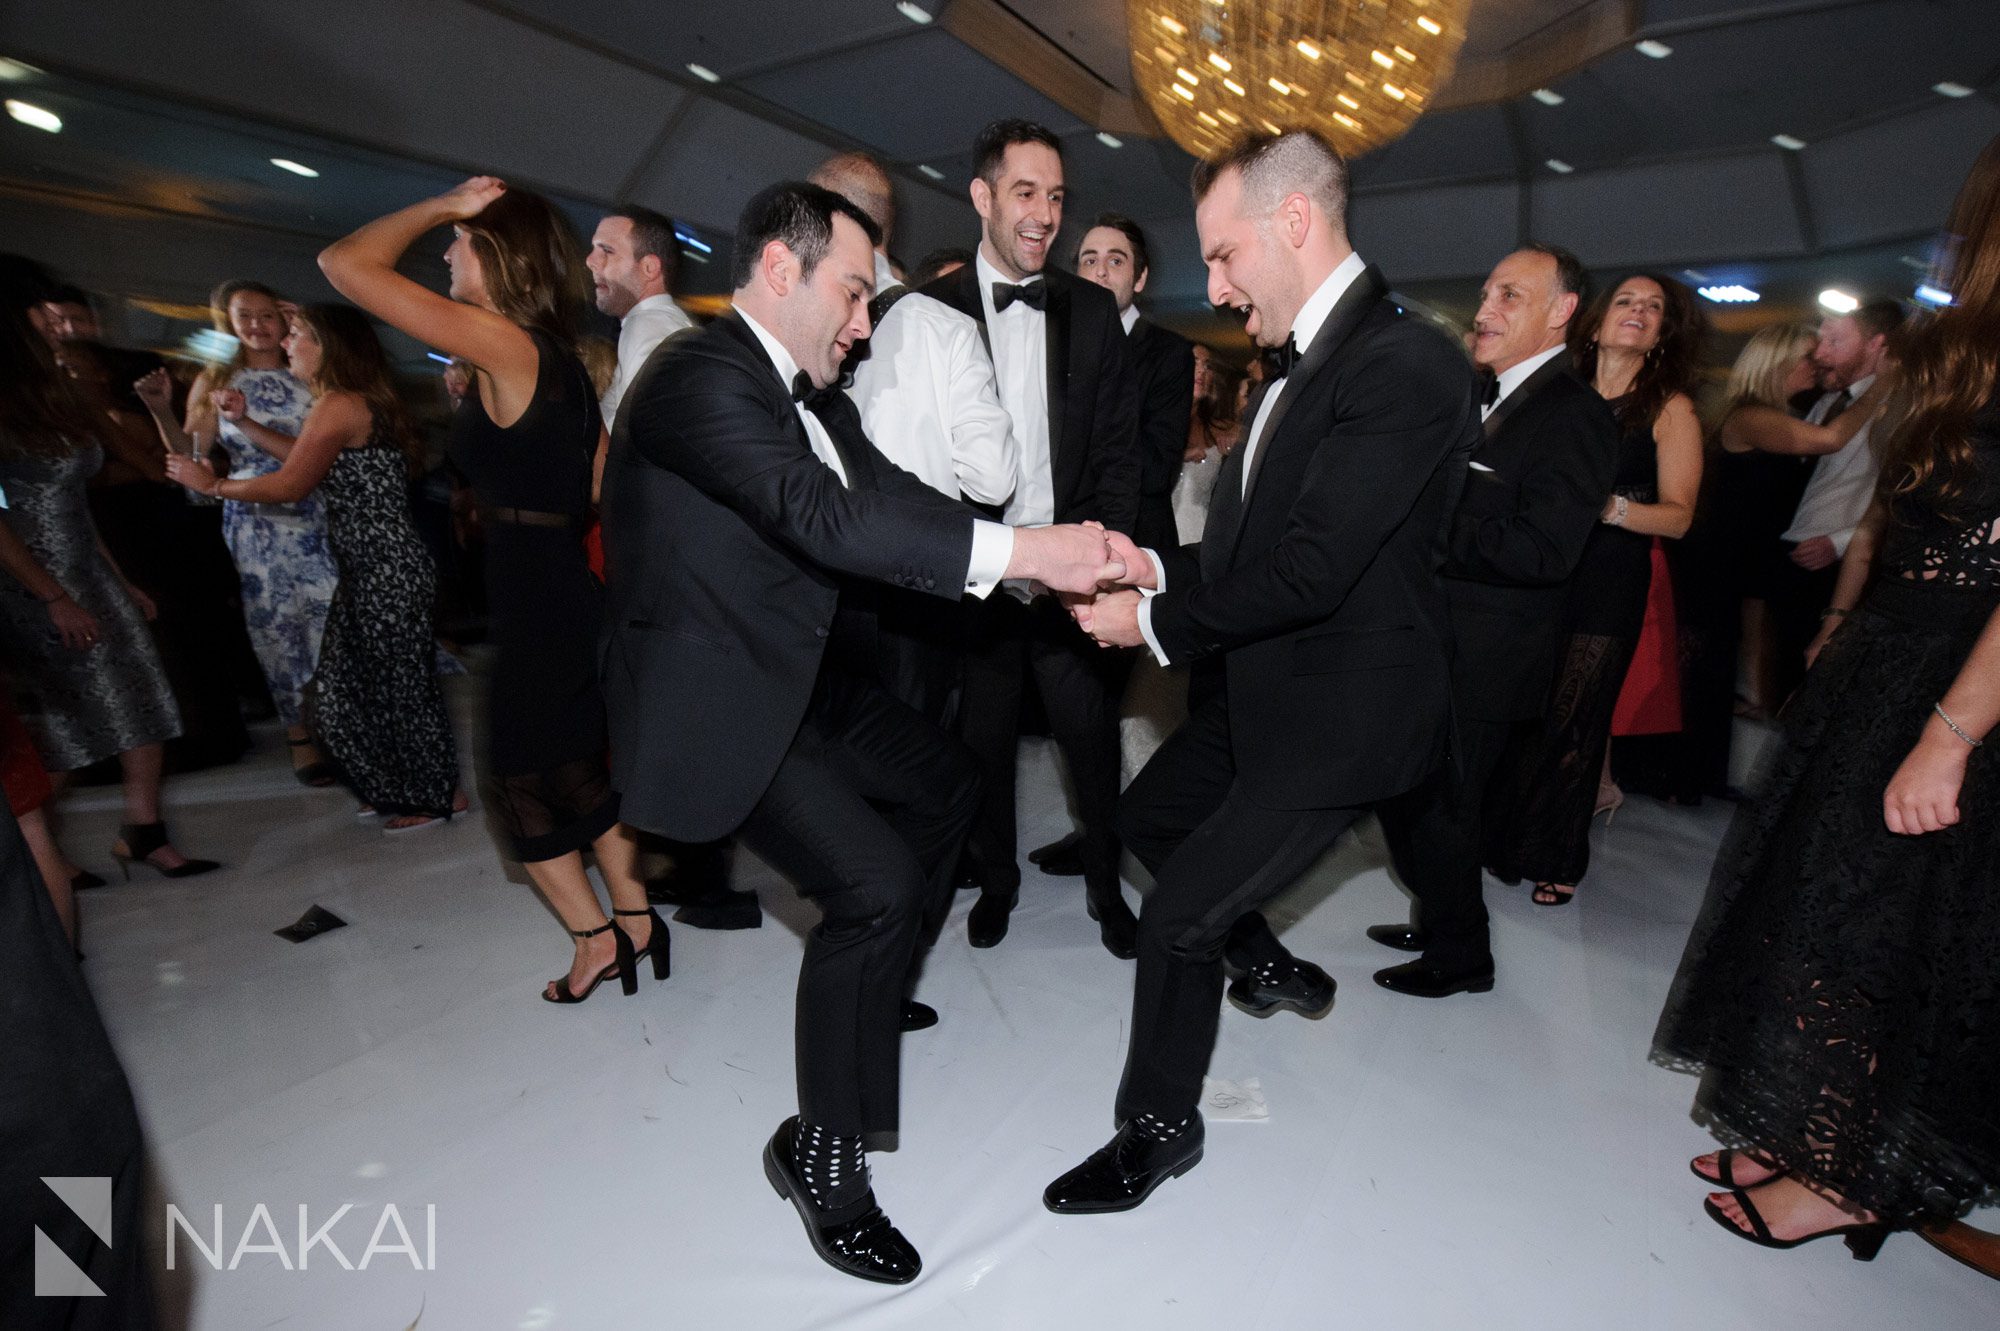 fairmont chicago wedding reception photo hora dancing jewish